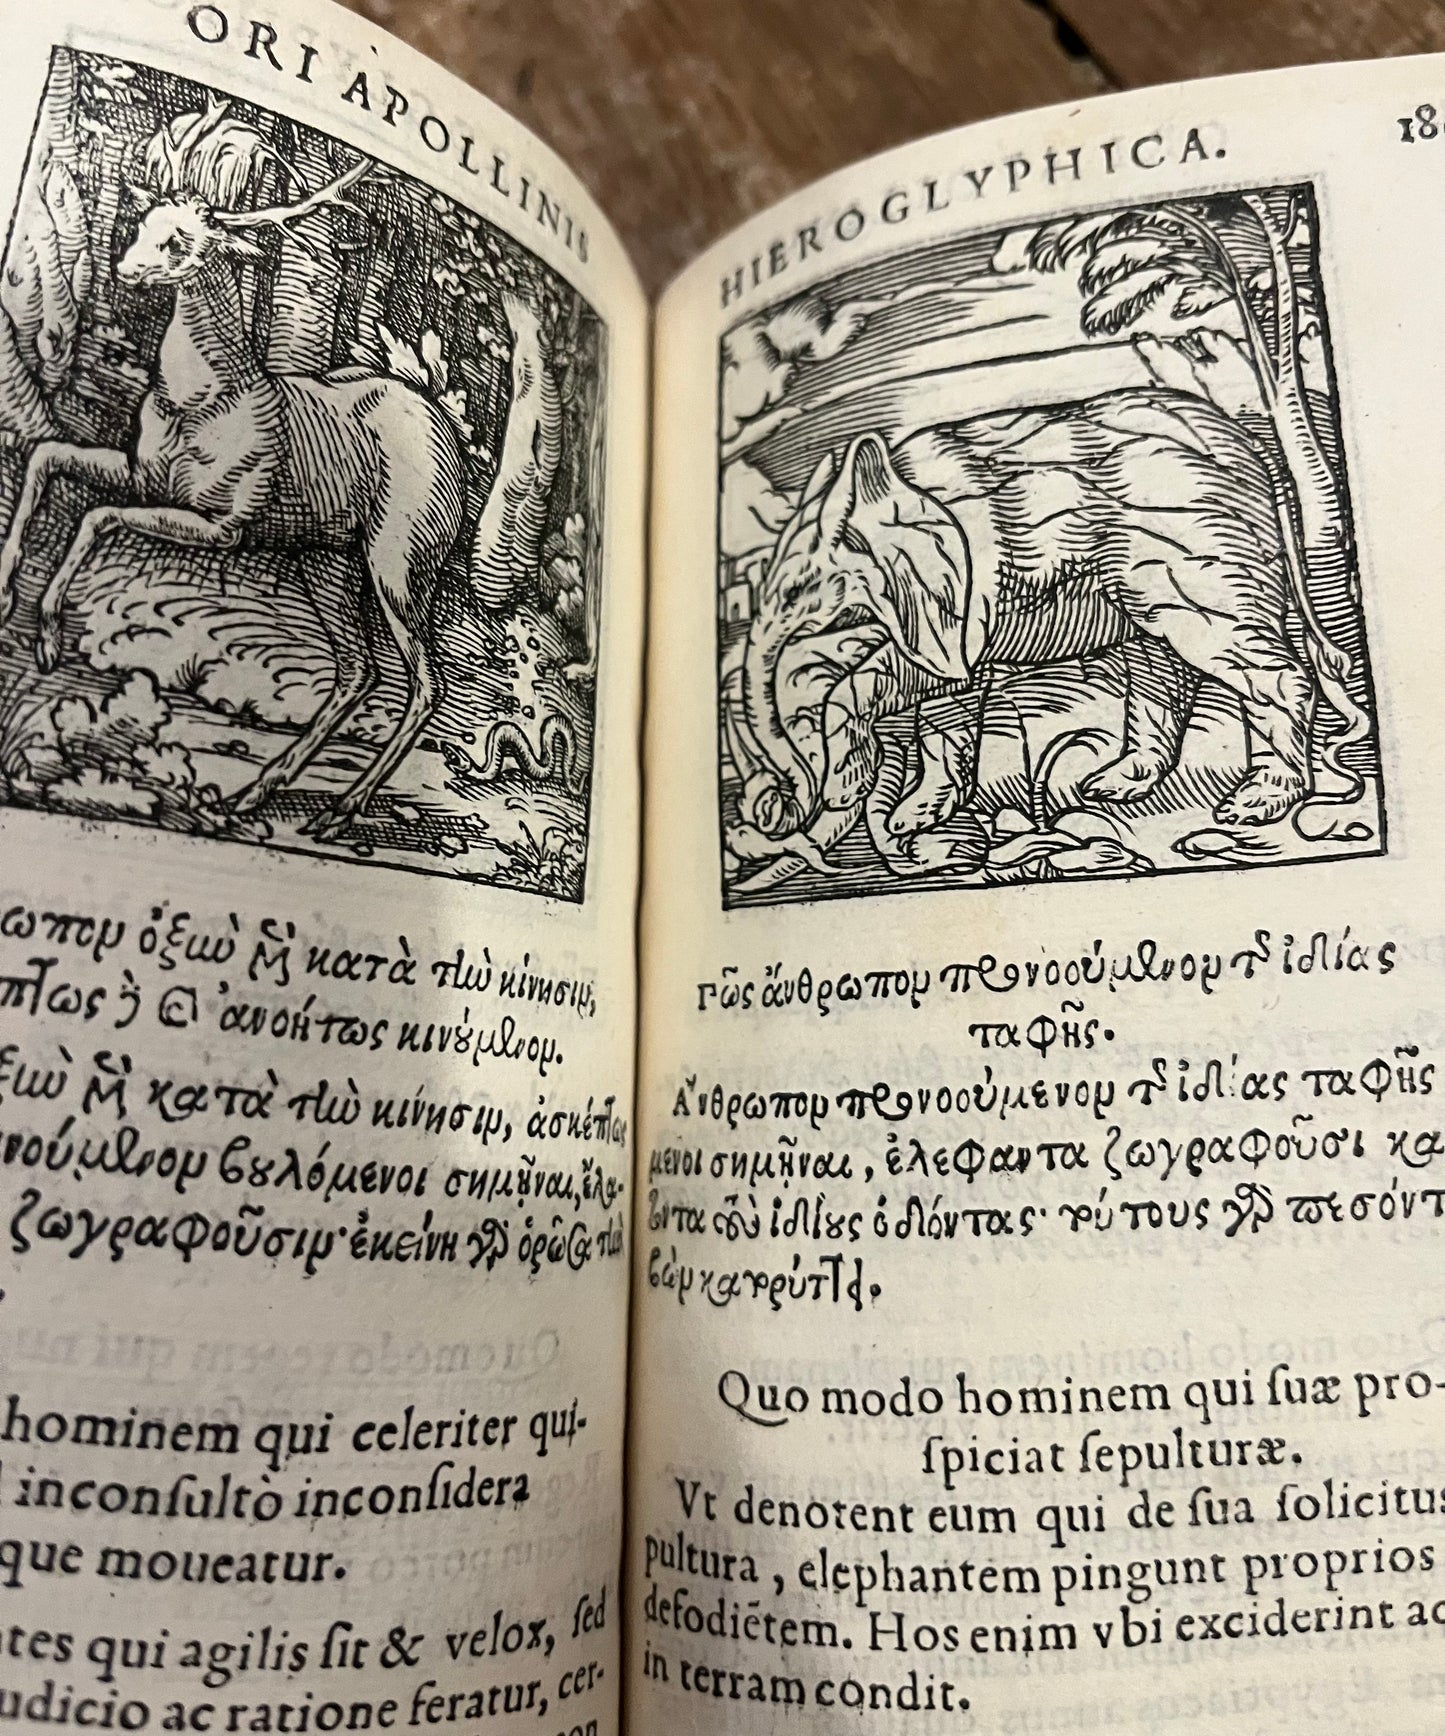 Earliest description of Hieroglyphics, Salamanders, Elephants etc - "Sacris Notis & sculpturis libri duo" - The Hieroglyphics of Horapollo - 1551